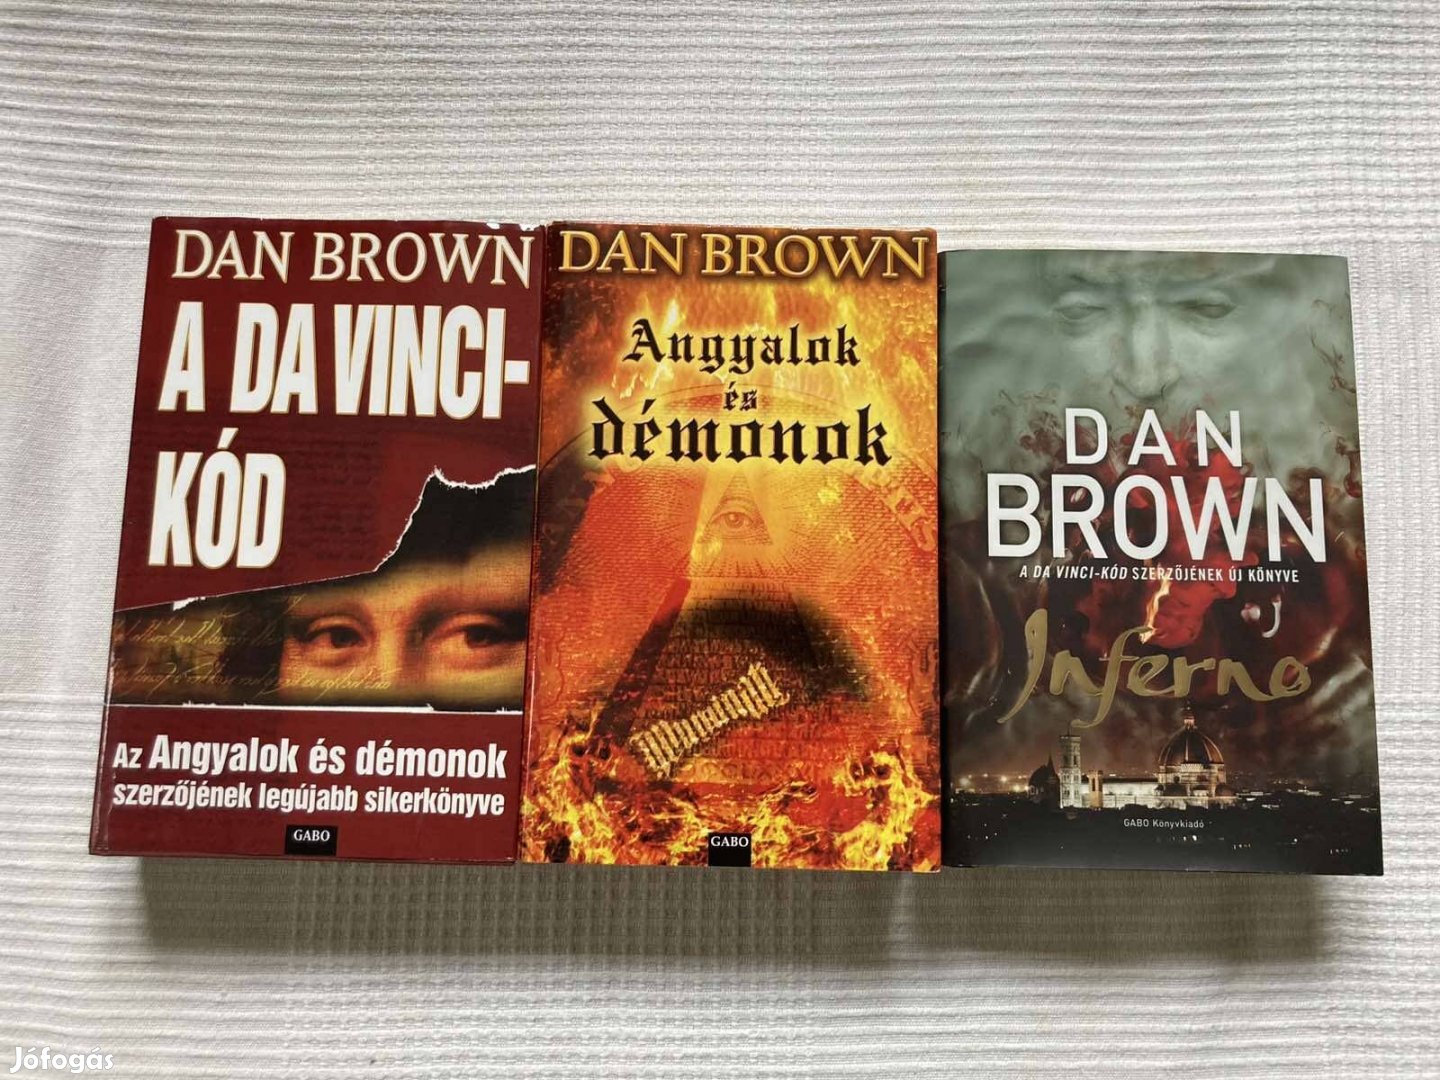 Dan Brown- Da Vinci kód sorozat összes része